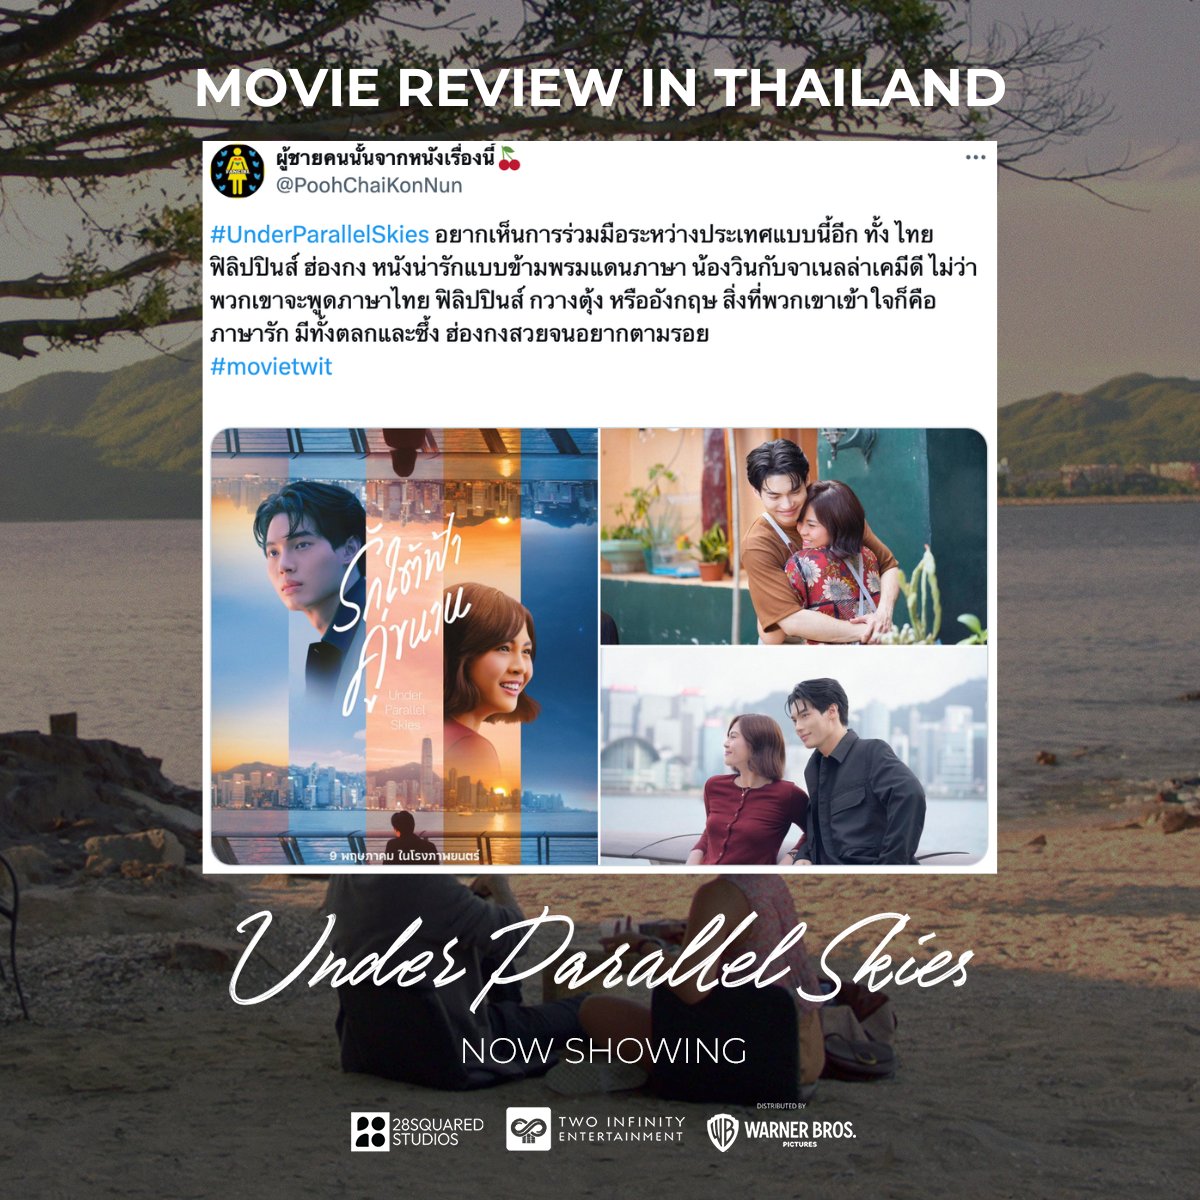 MOVIE REVIEW ON #UNDERPARALLELSKIES IN THAILAND ร่วมสัมผัสประสบการณ์ การเดินทางแห่งรัก และการไขว่คว้าหาความสุข. นำแสดงโดย วิน เมธวิน และ เจเนลลา ซัลวาดอร์ รับชม 'รักใต้ฟ้าคู่ขนาน - Under Parallel Skies' ได้แล้ววันนี้ในโรงภาพยนตร์ทั่วประเทศ! #UnderParallelSkies #WinMetawin…